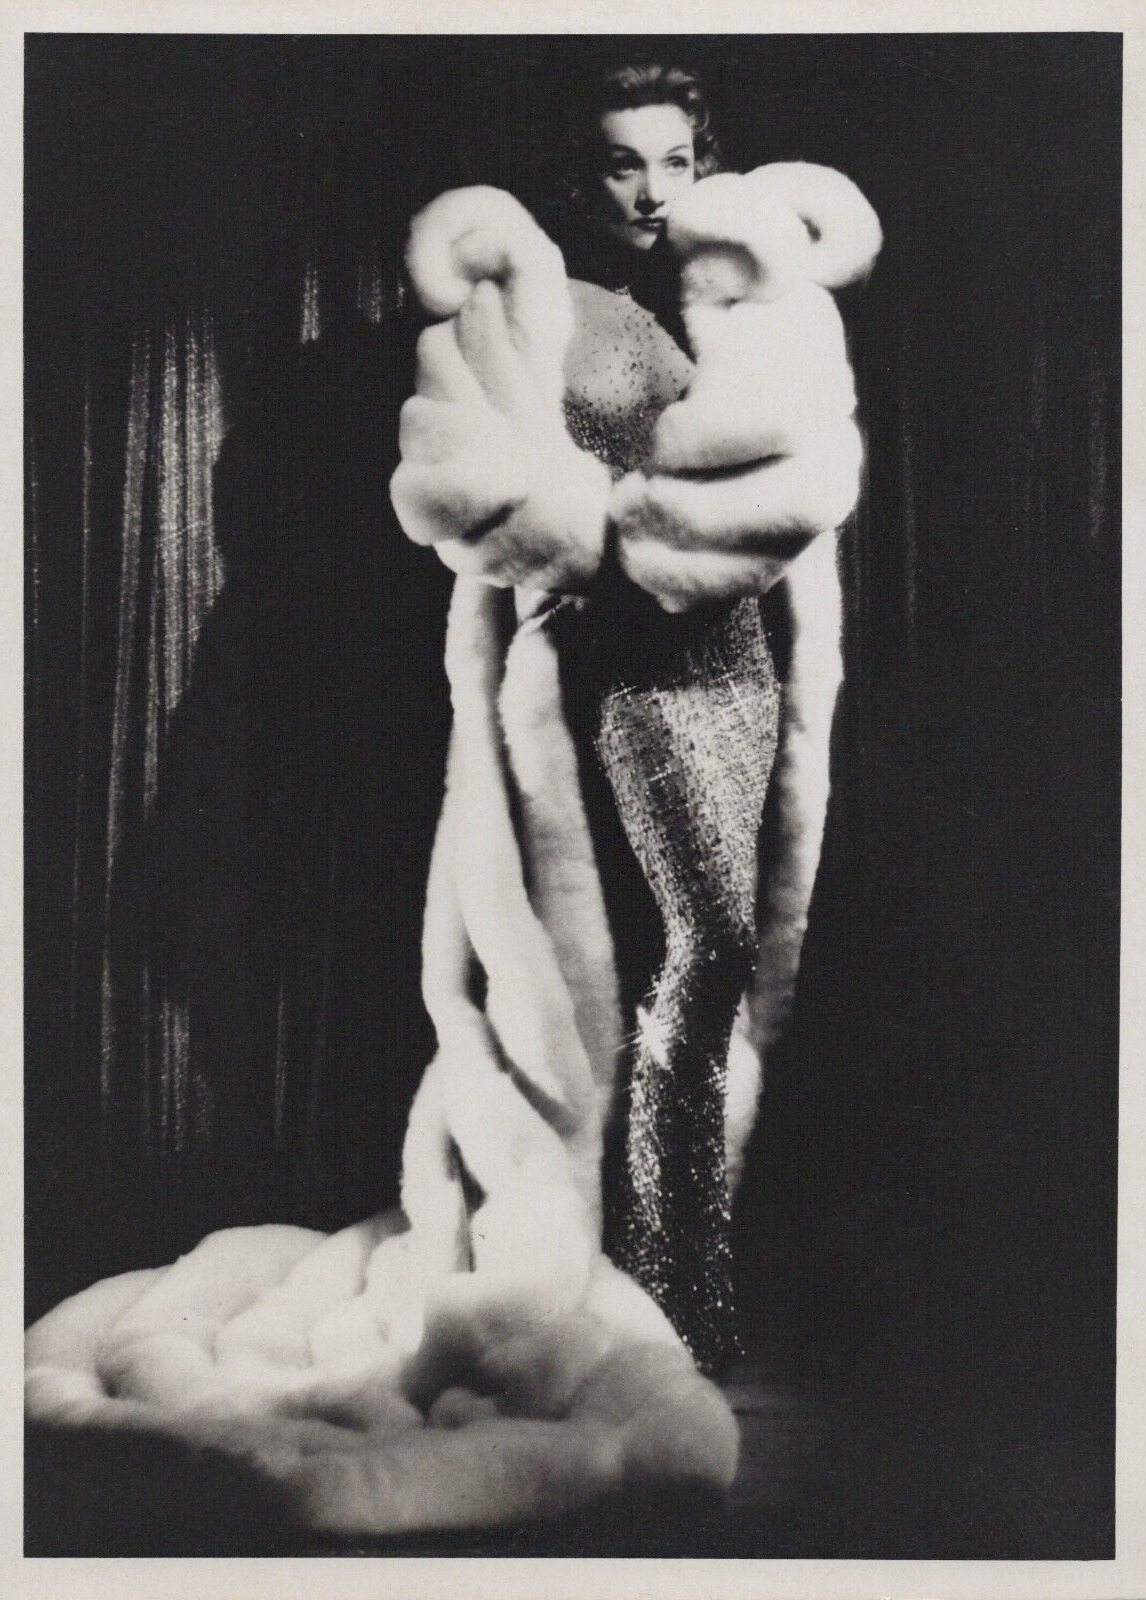 HOLLYWOOD BEAUTY MARLENE DIETRICH STYLISH POSE STUNNING PORTRAIT 1970s Photo C40